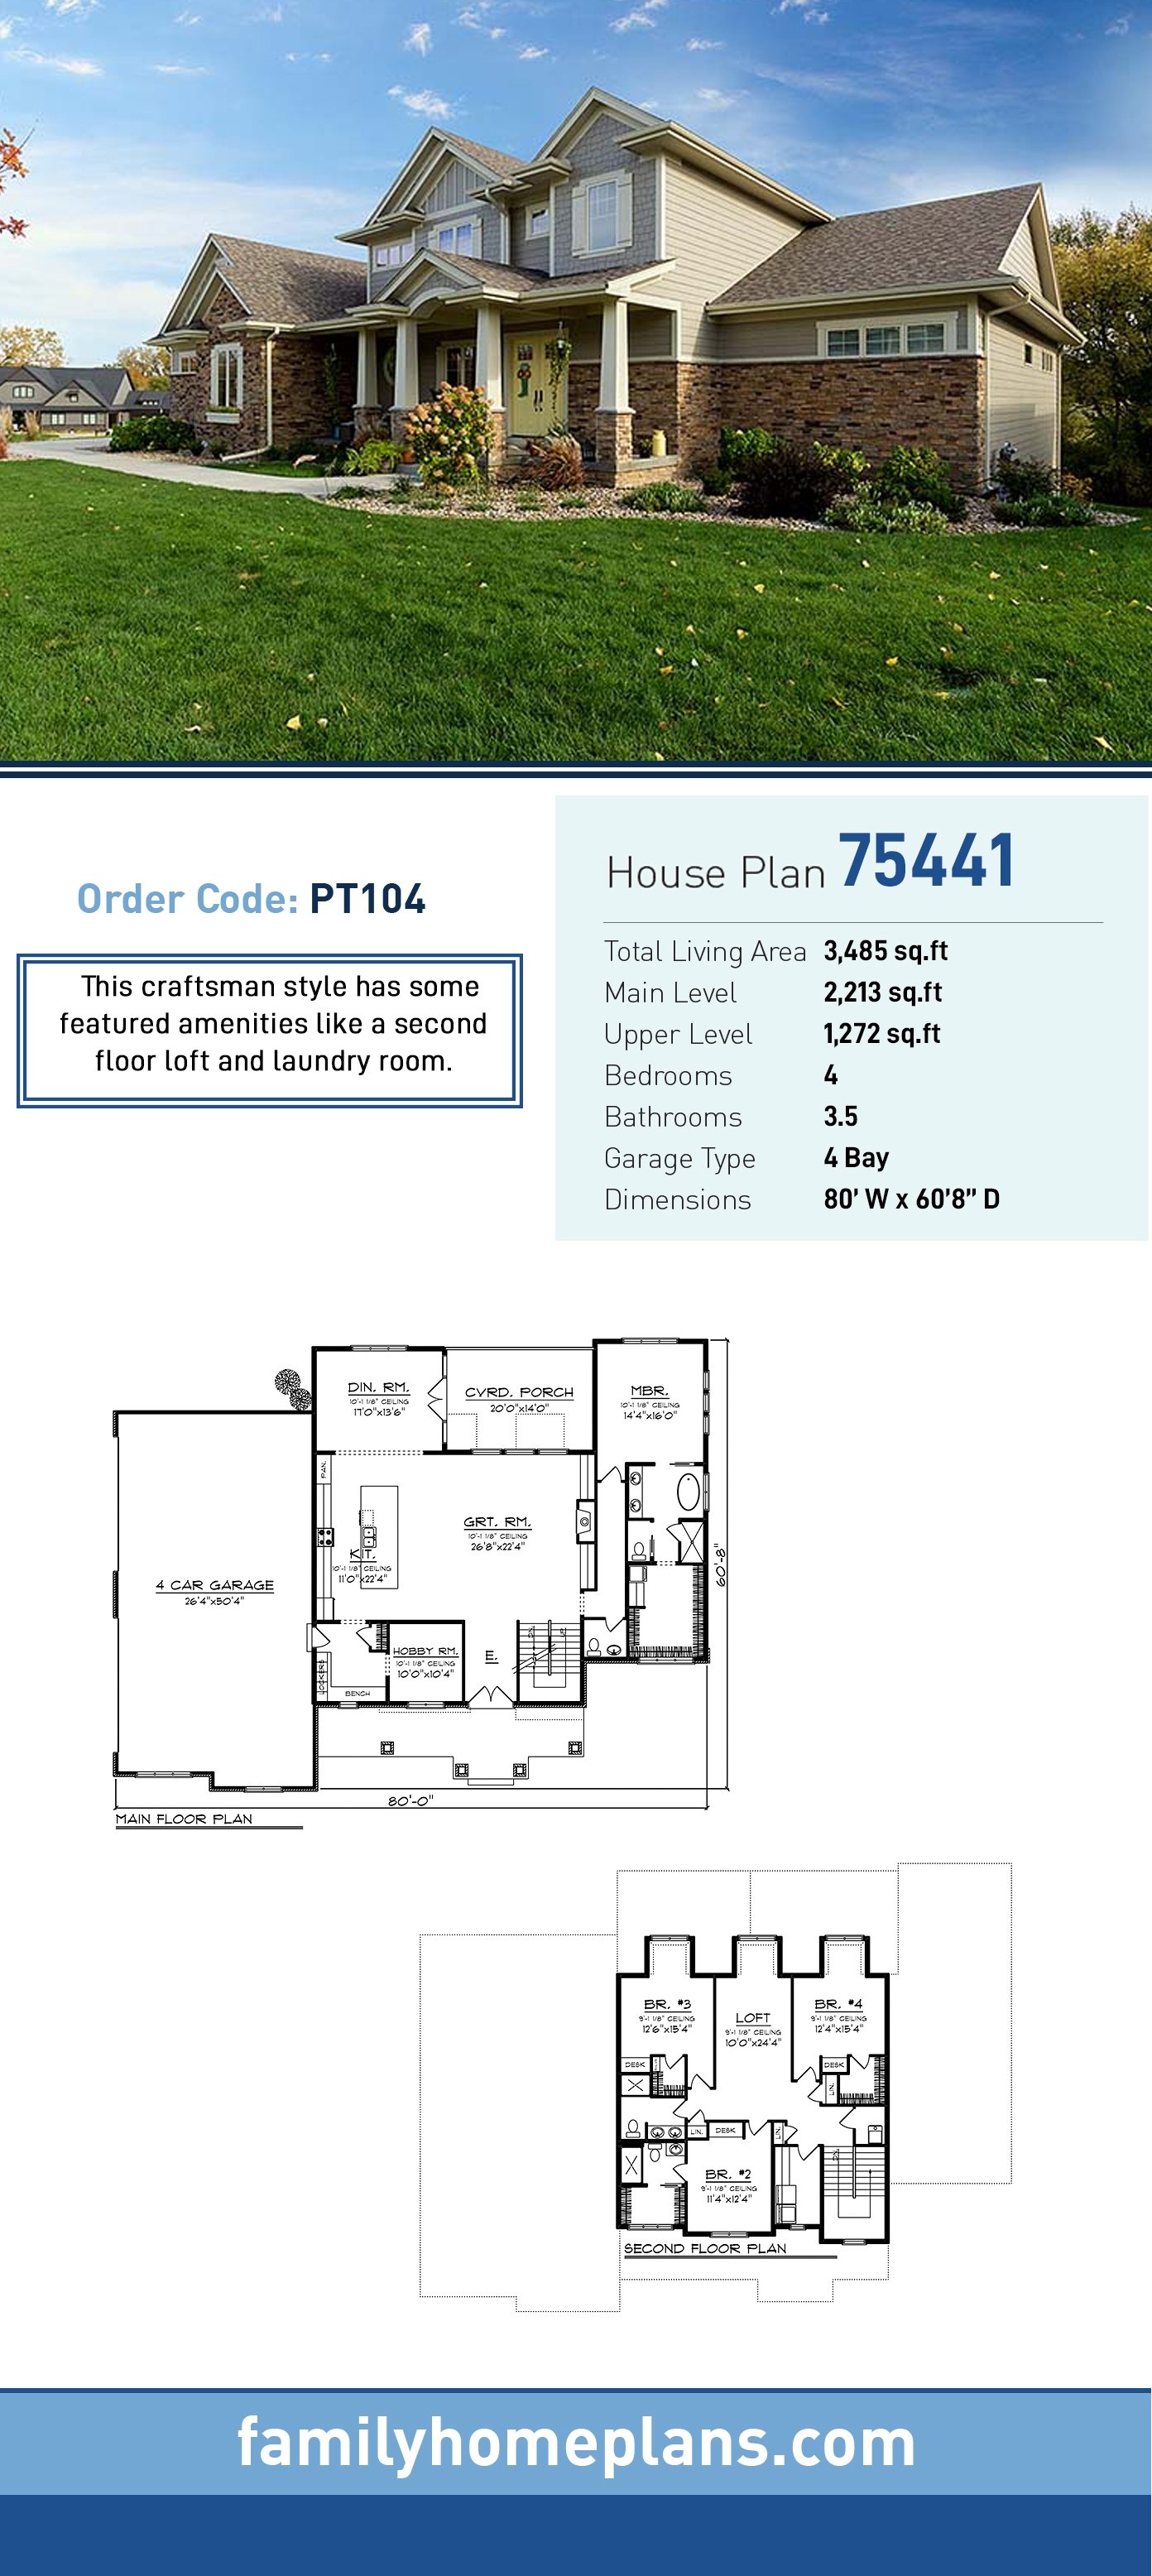 House Plan 75441